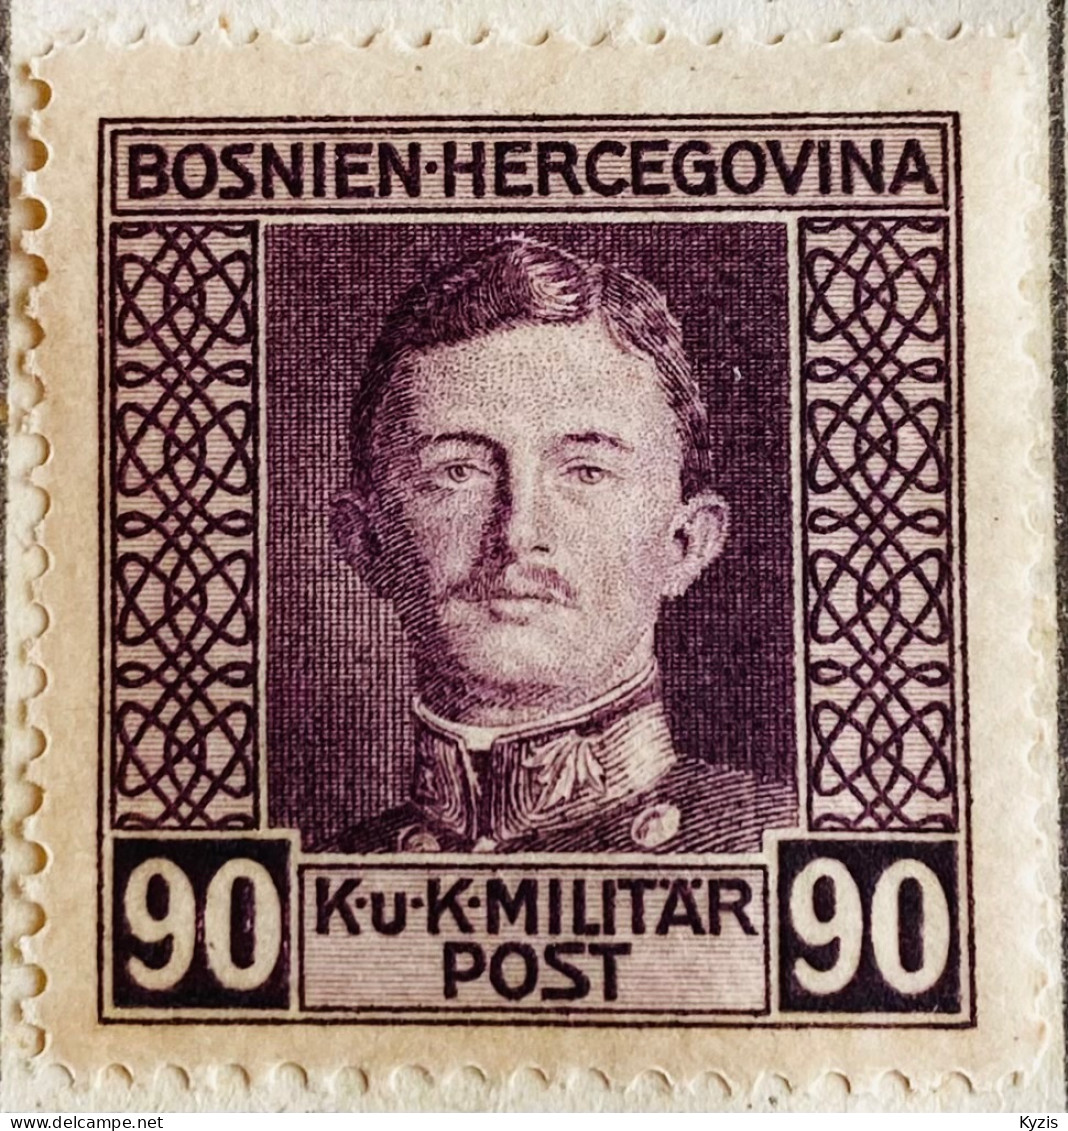 BOSNIE-HERZÉGOVINE - Charles Ier 1917 - MICHEL 137 A, NEUF AVEC GOMME - Bosnia And Herzegovina